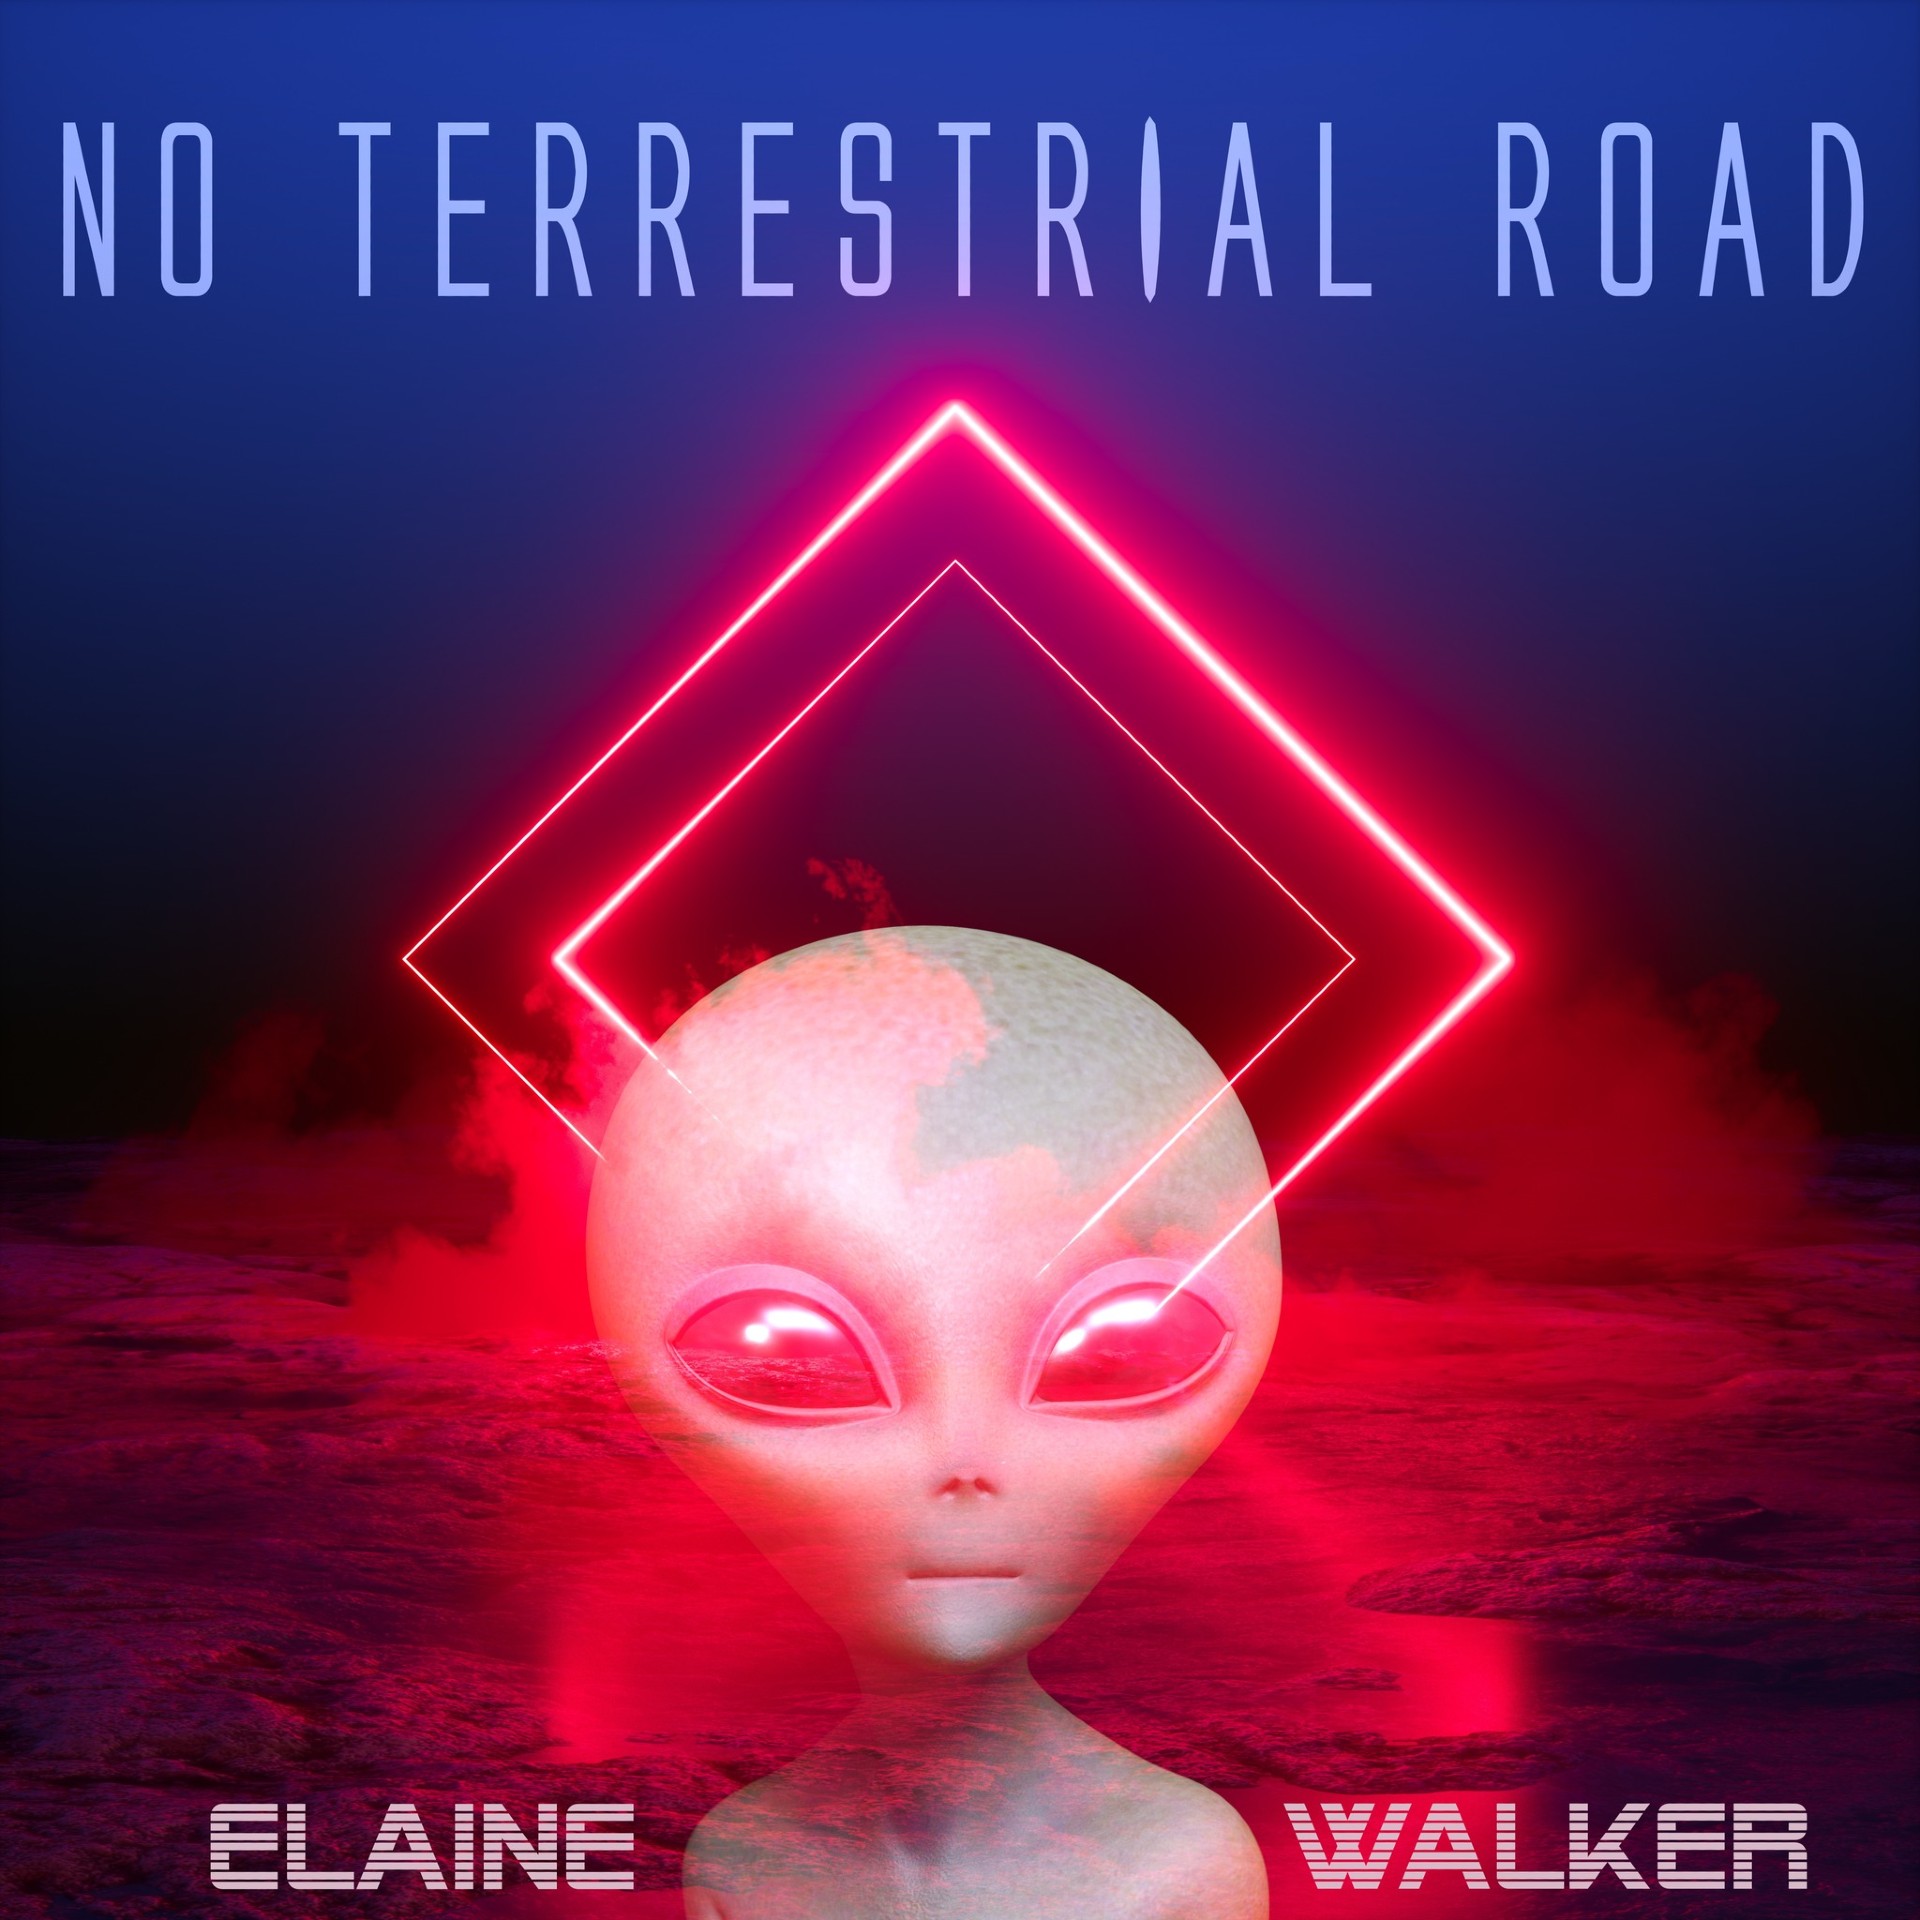 Elaine Walker ‘No Terrestrial Road’ album artwork